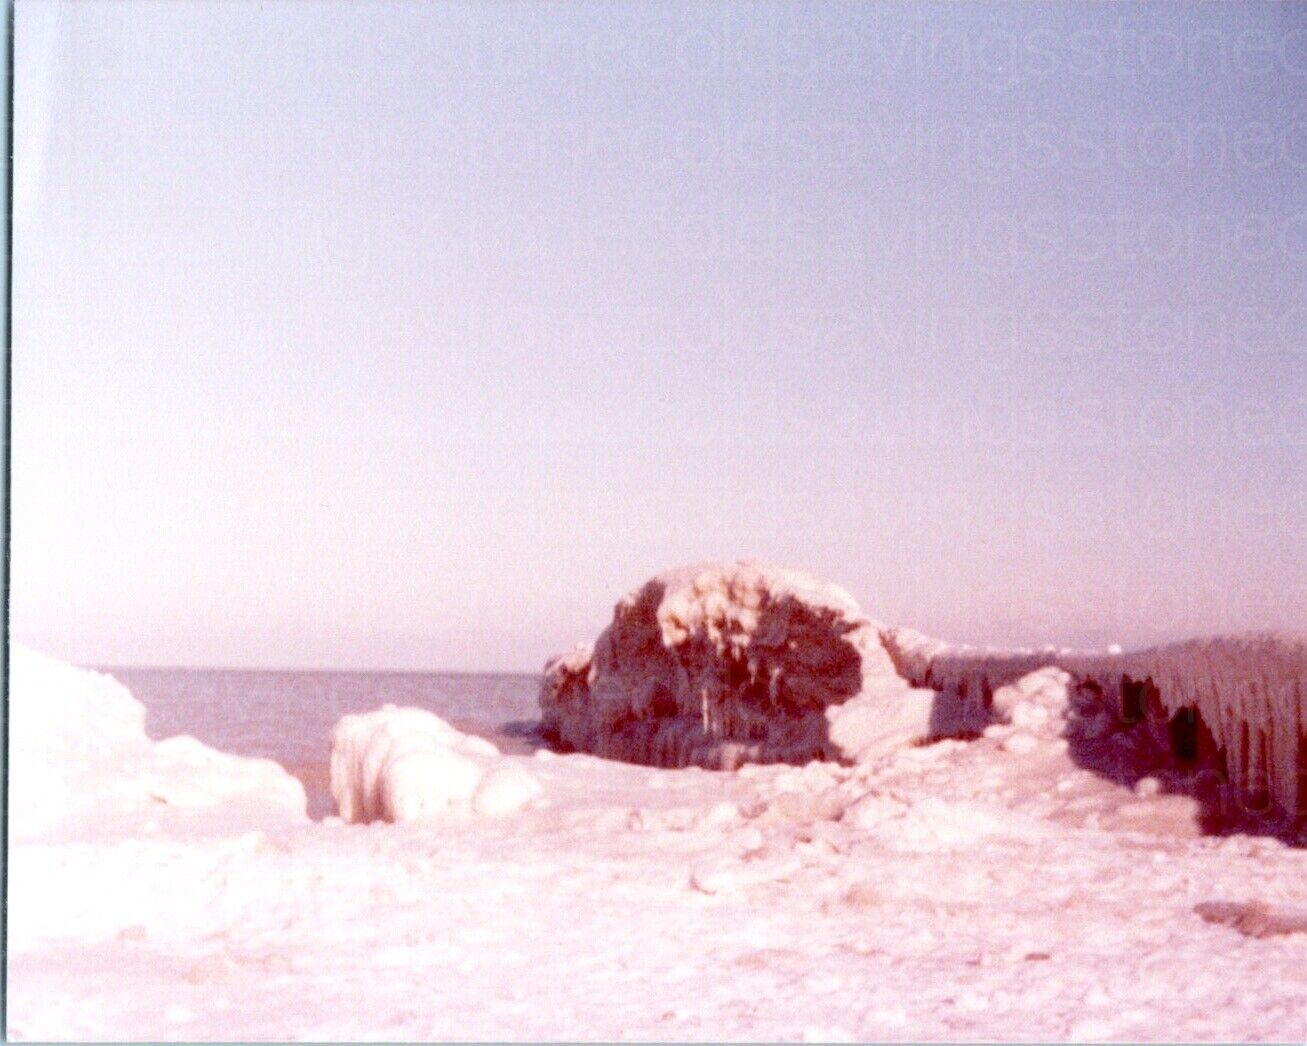 VINTAGE FOUND PHOTO - 1970S - ICE COVERED BEACH OCEAN COASTAL SNOW WINTER SHOT